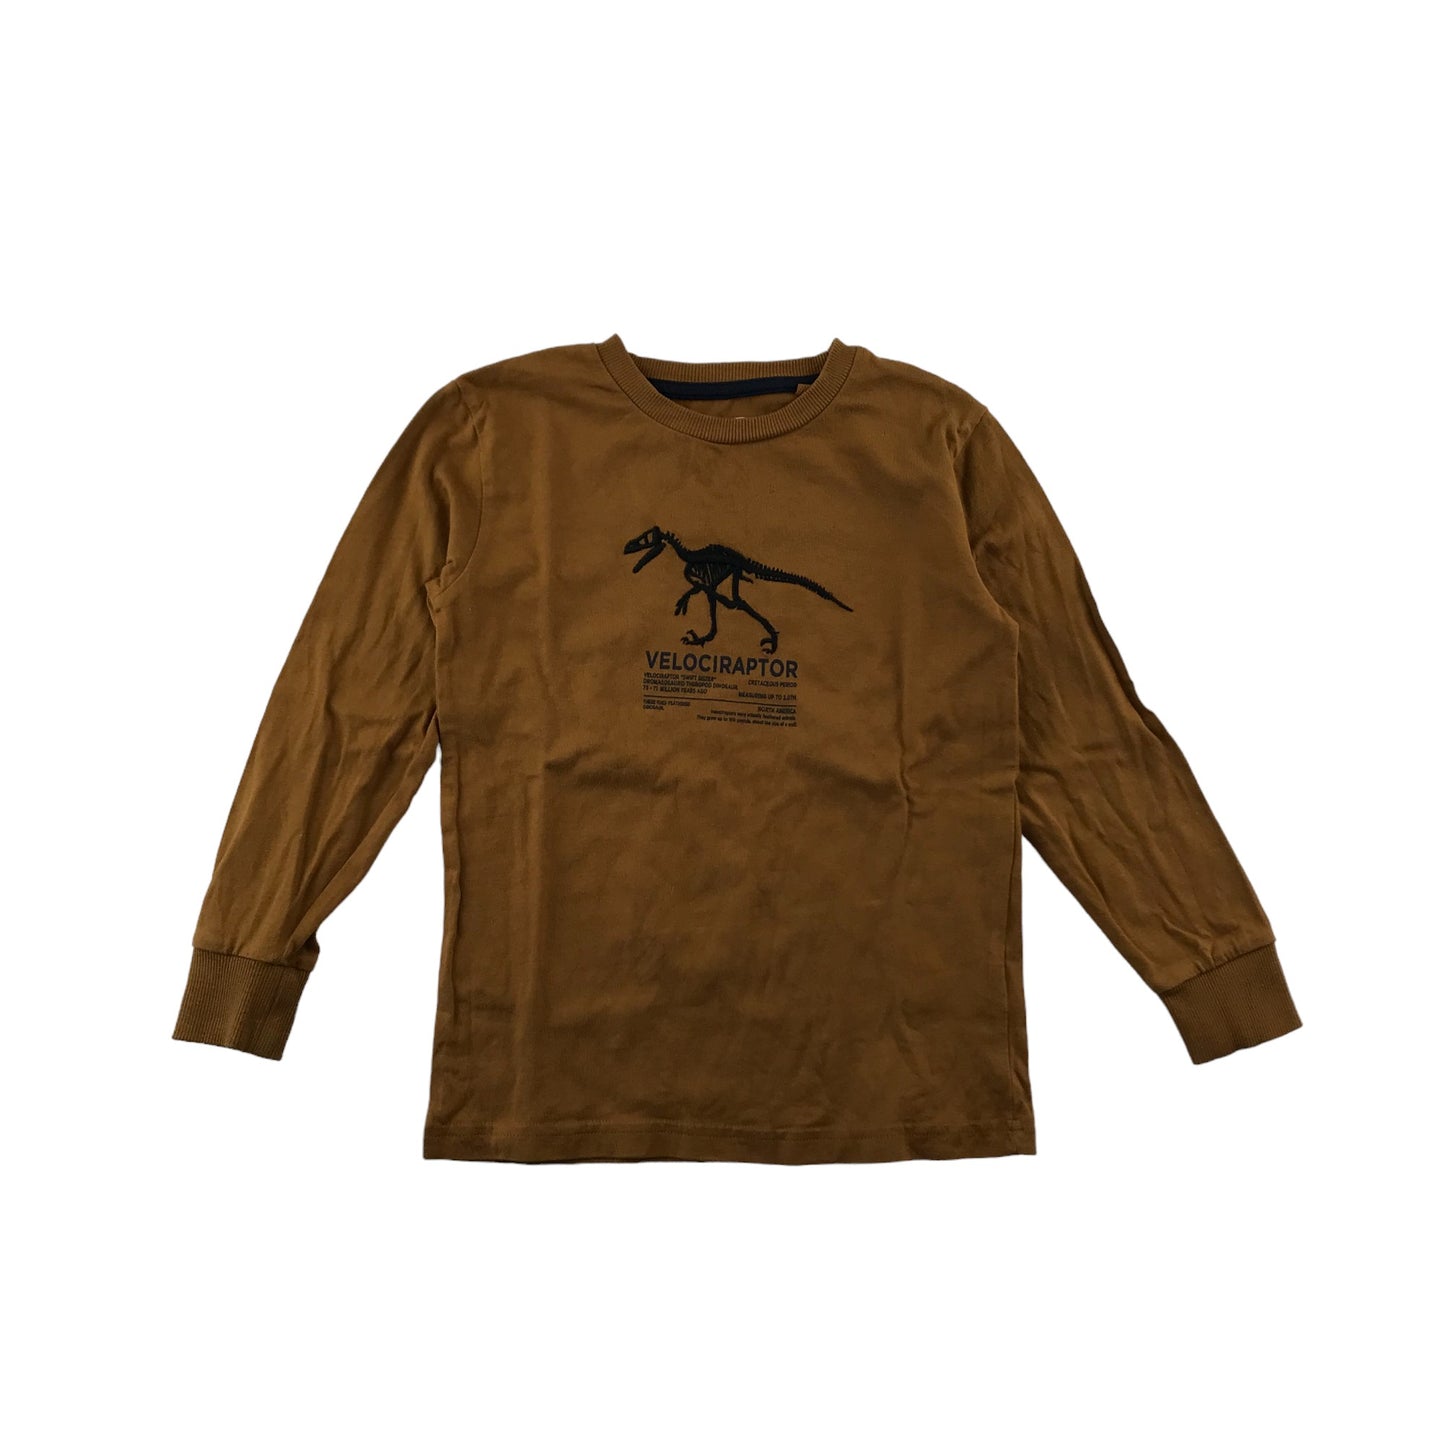 Next T-shirt Age 5-6 Mustard Yellow Brown Dinosaur Long Sleeve Cotton